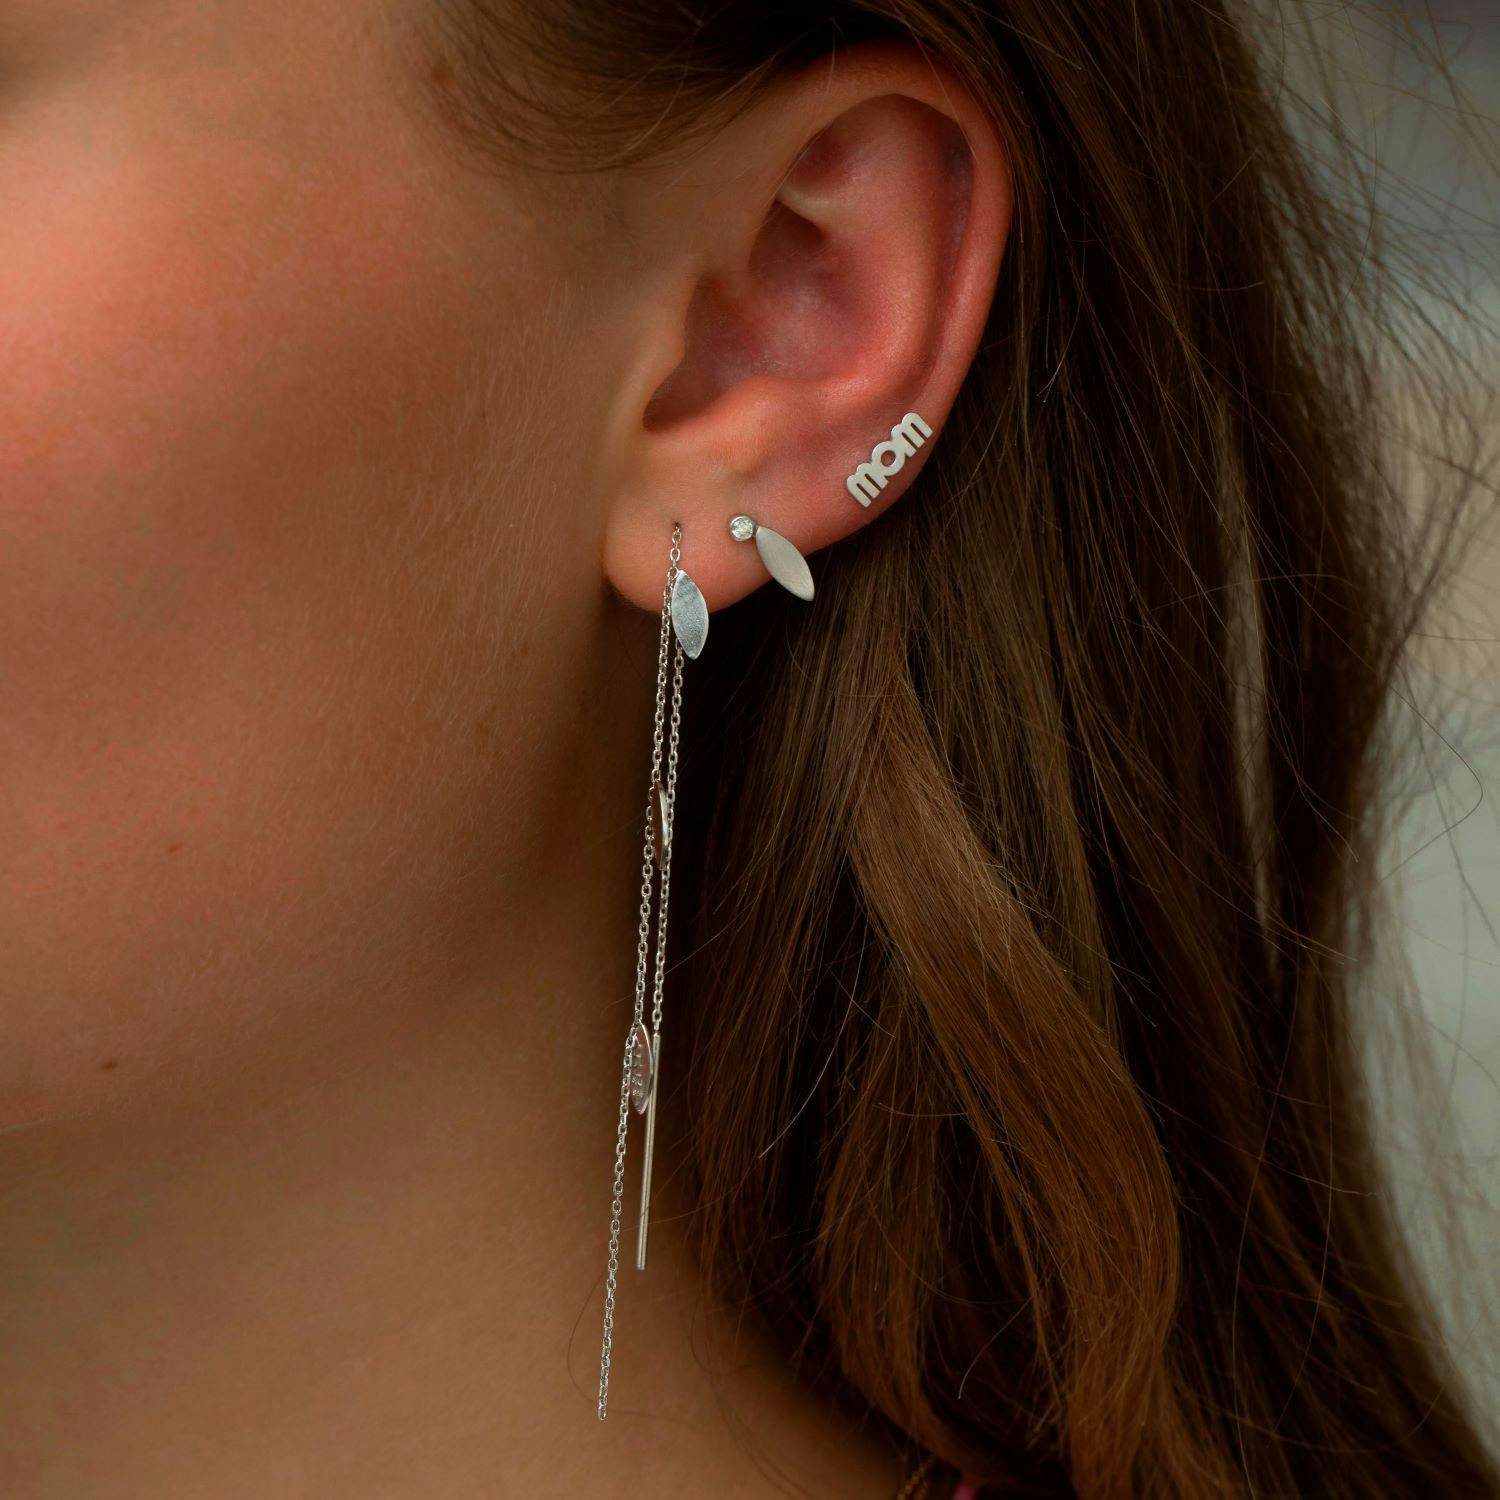 Wow Mom Earring fra STINE A Jewelry i Forgylt-Sølv Sterling 925